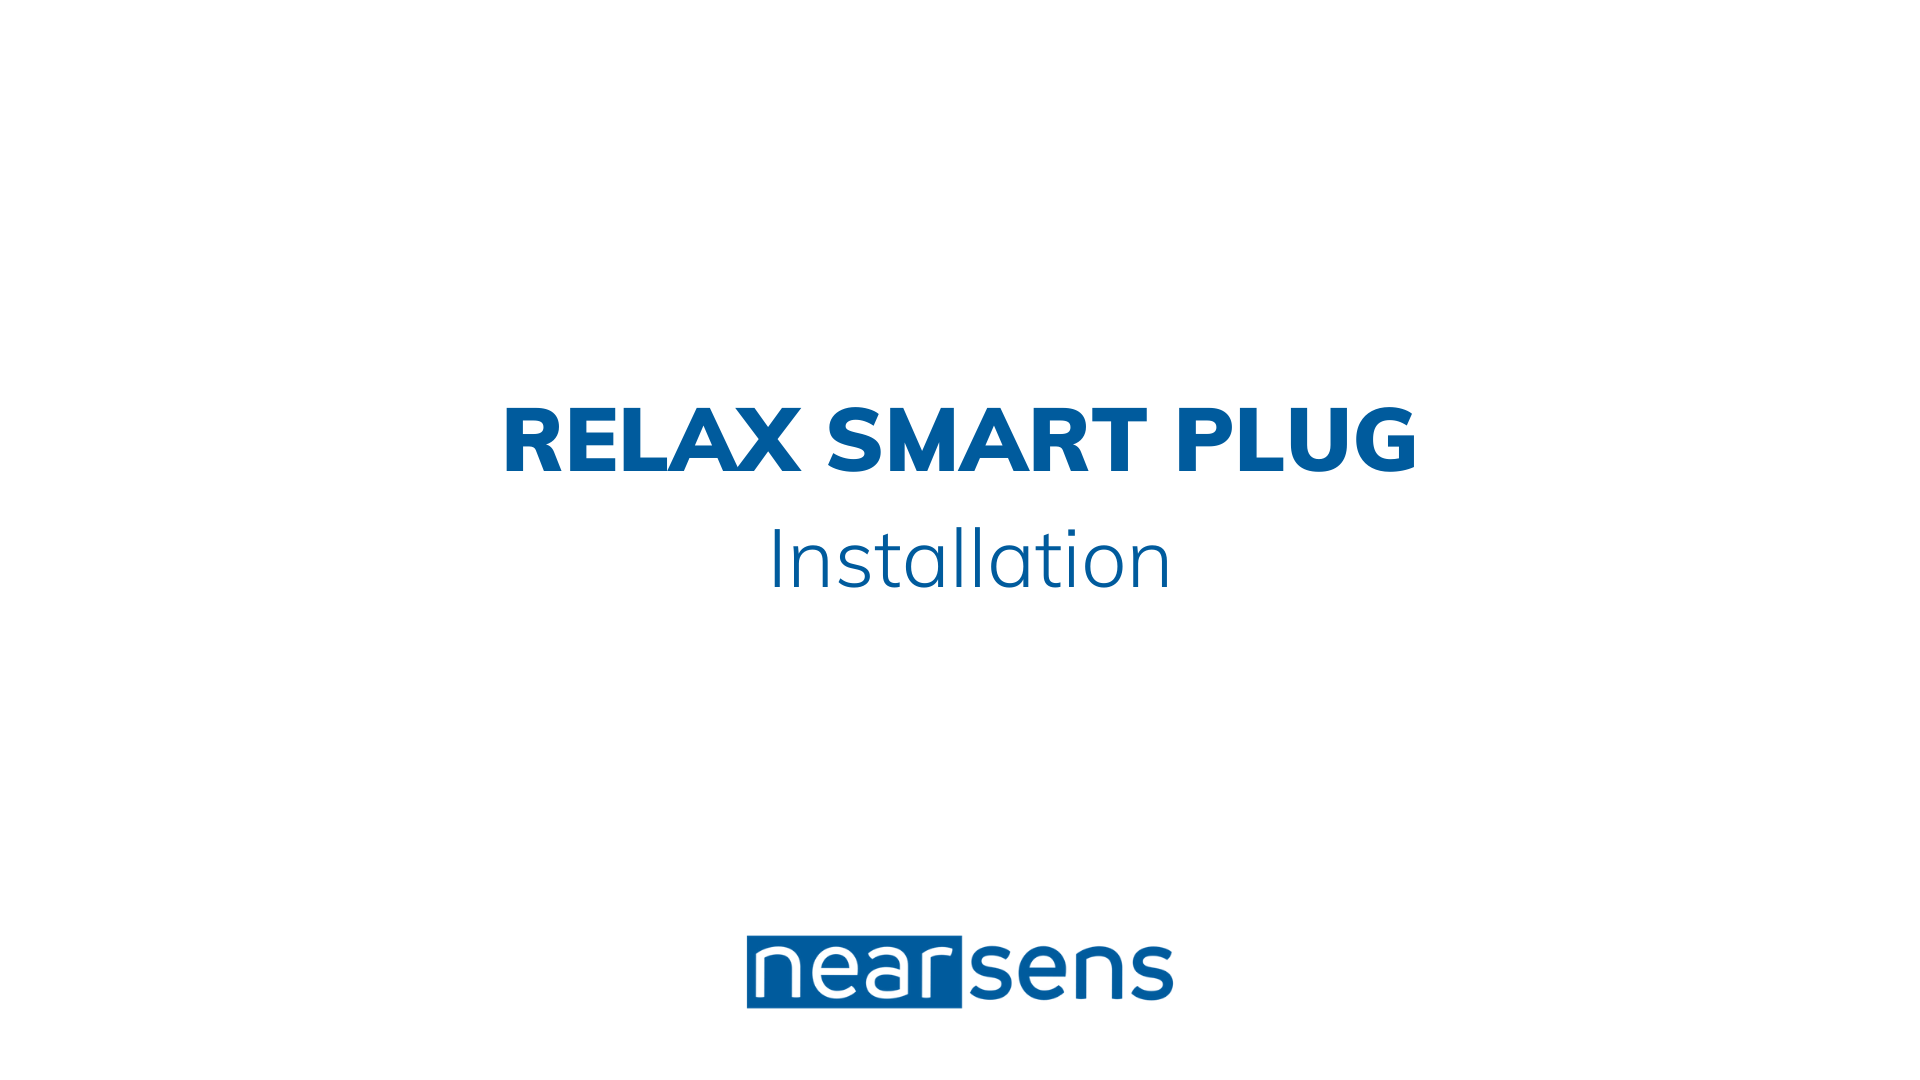 relax smart plug installation